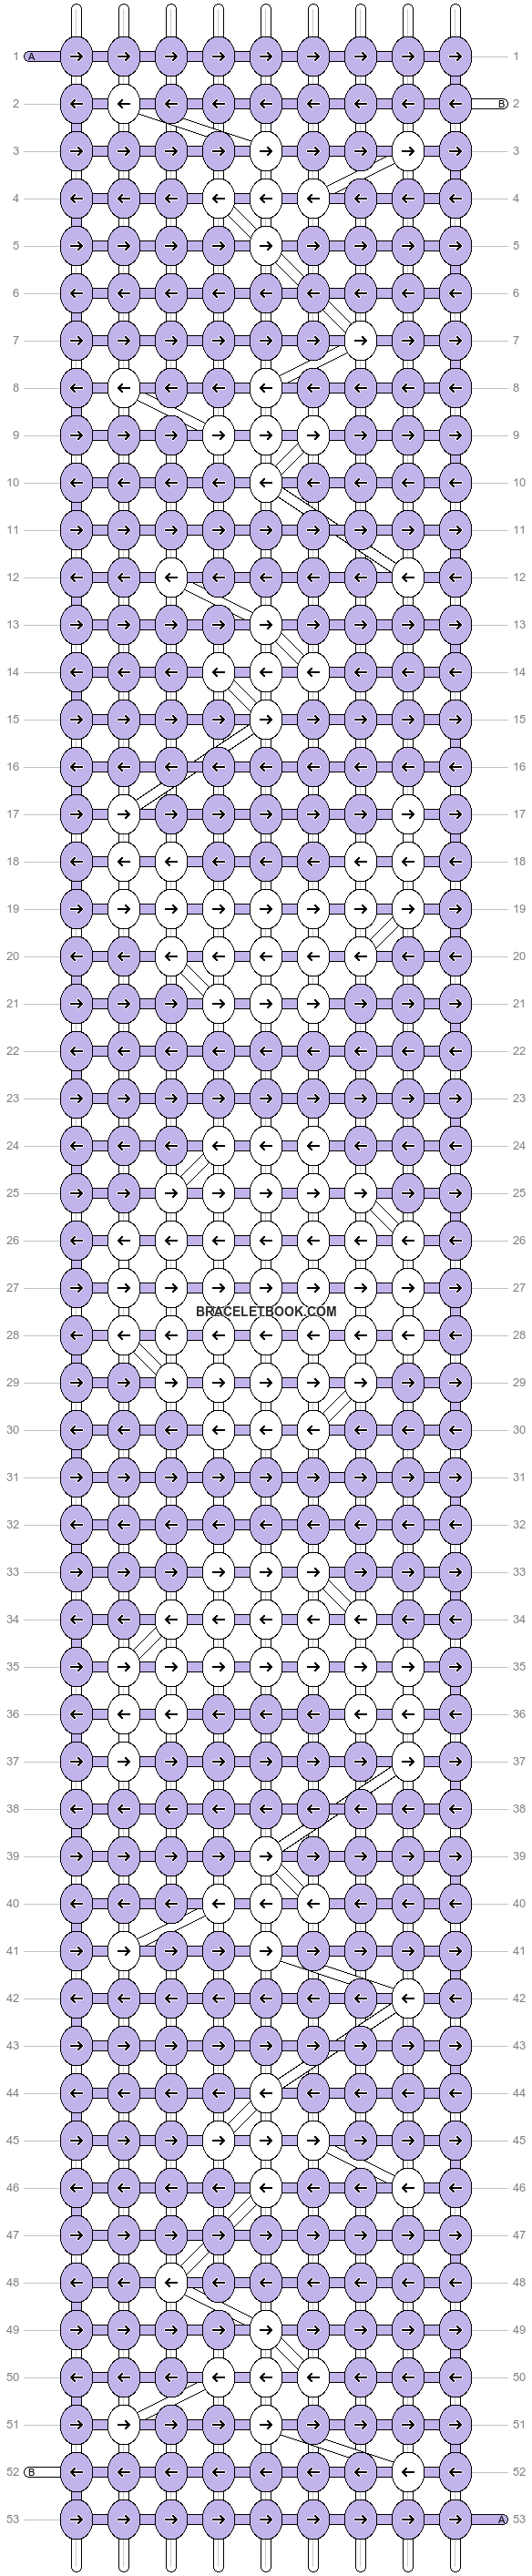 Alpha pattern #40067 variation #55820 pattern